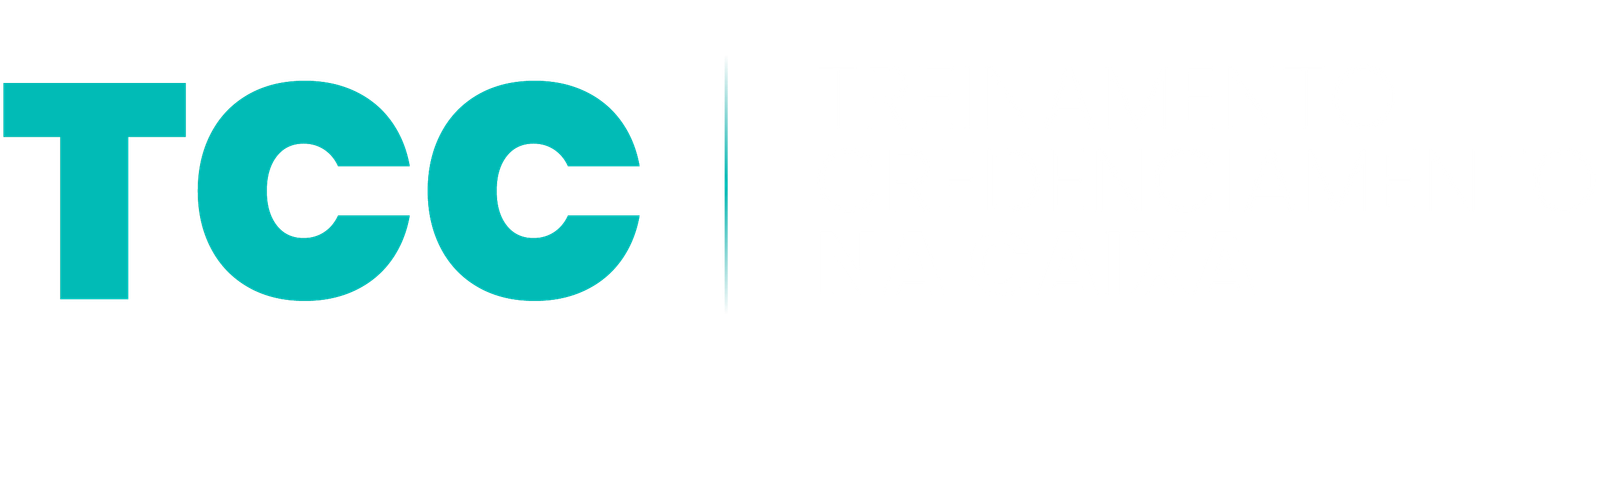 logo tcc